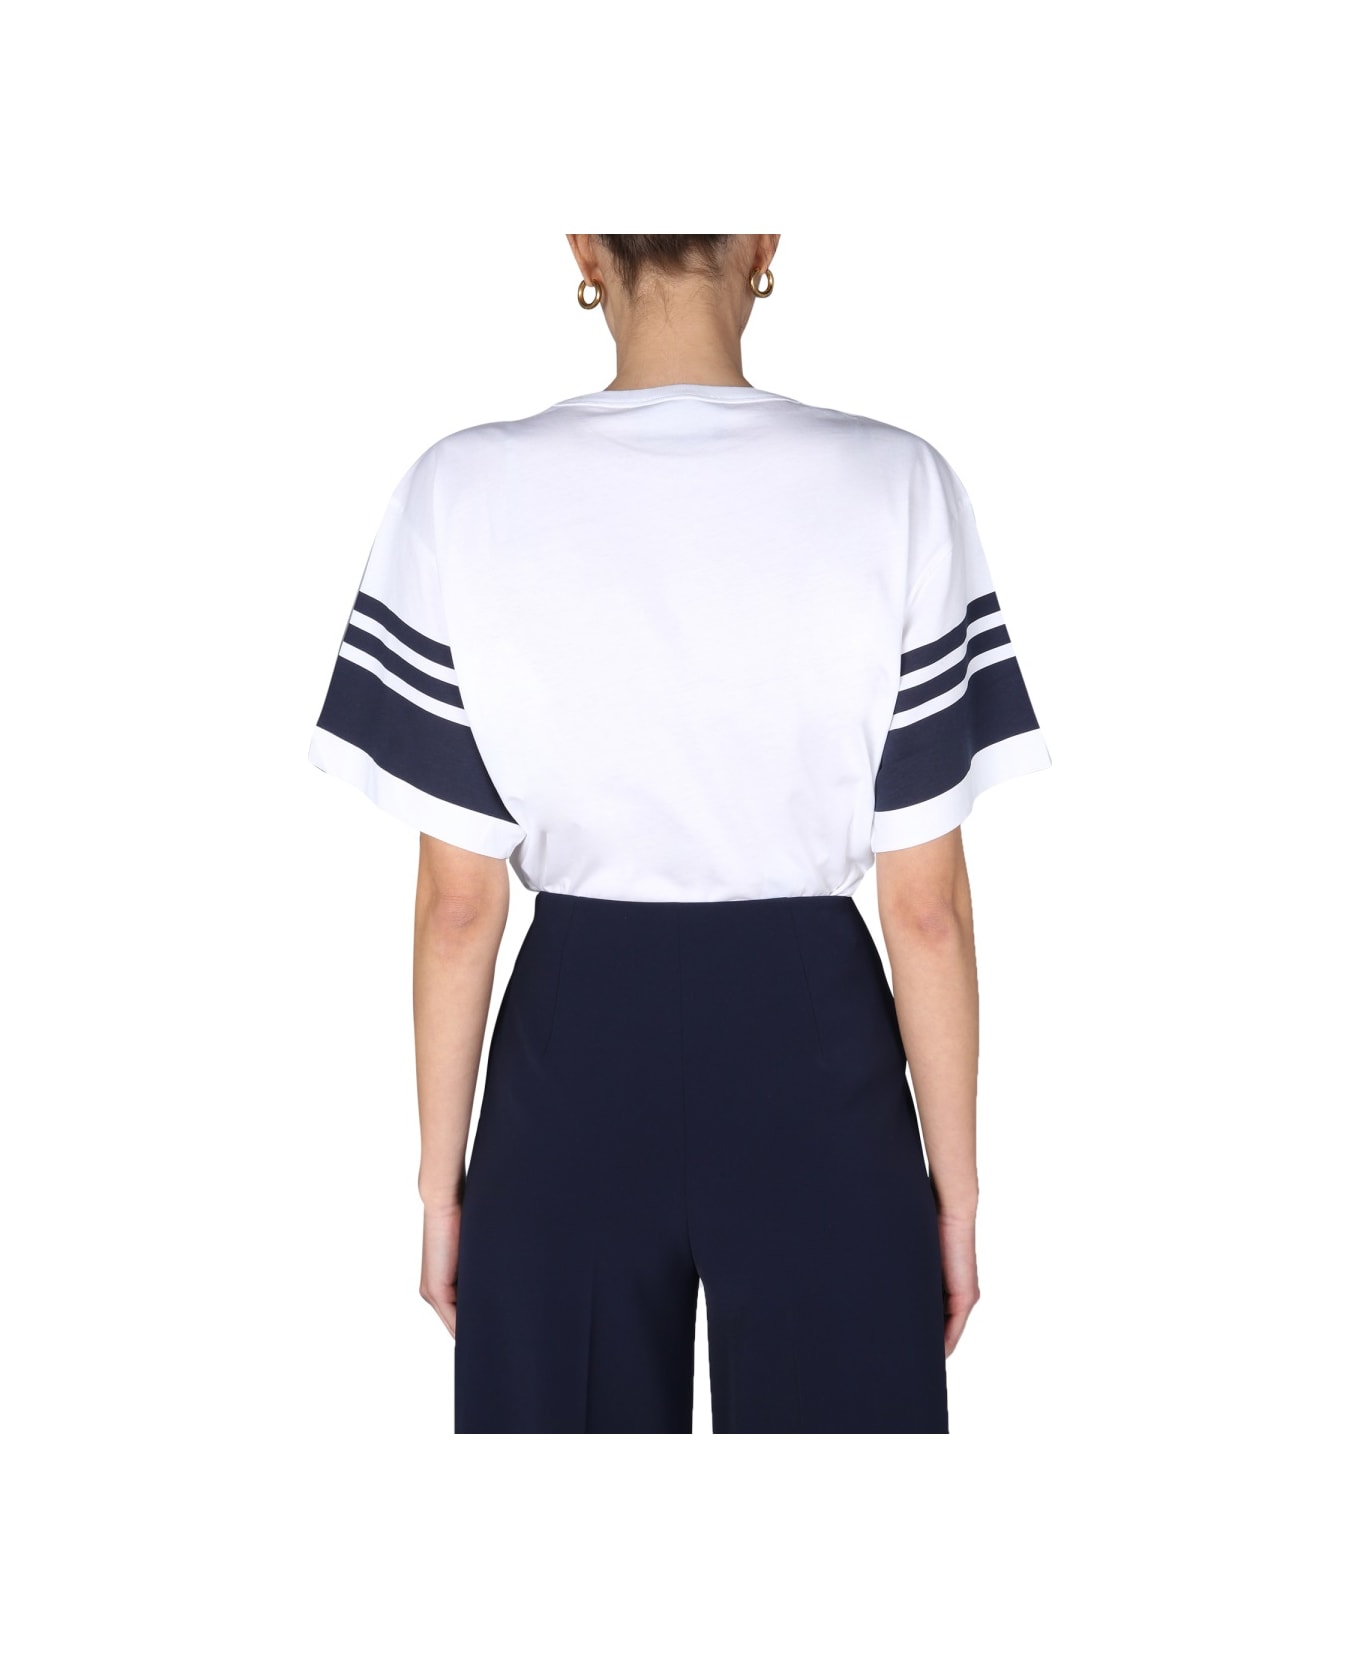 Boutique Moschino "sailor Mood" T-shirt - WHITE